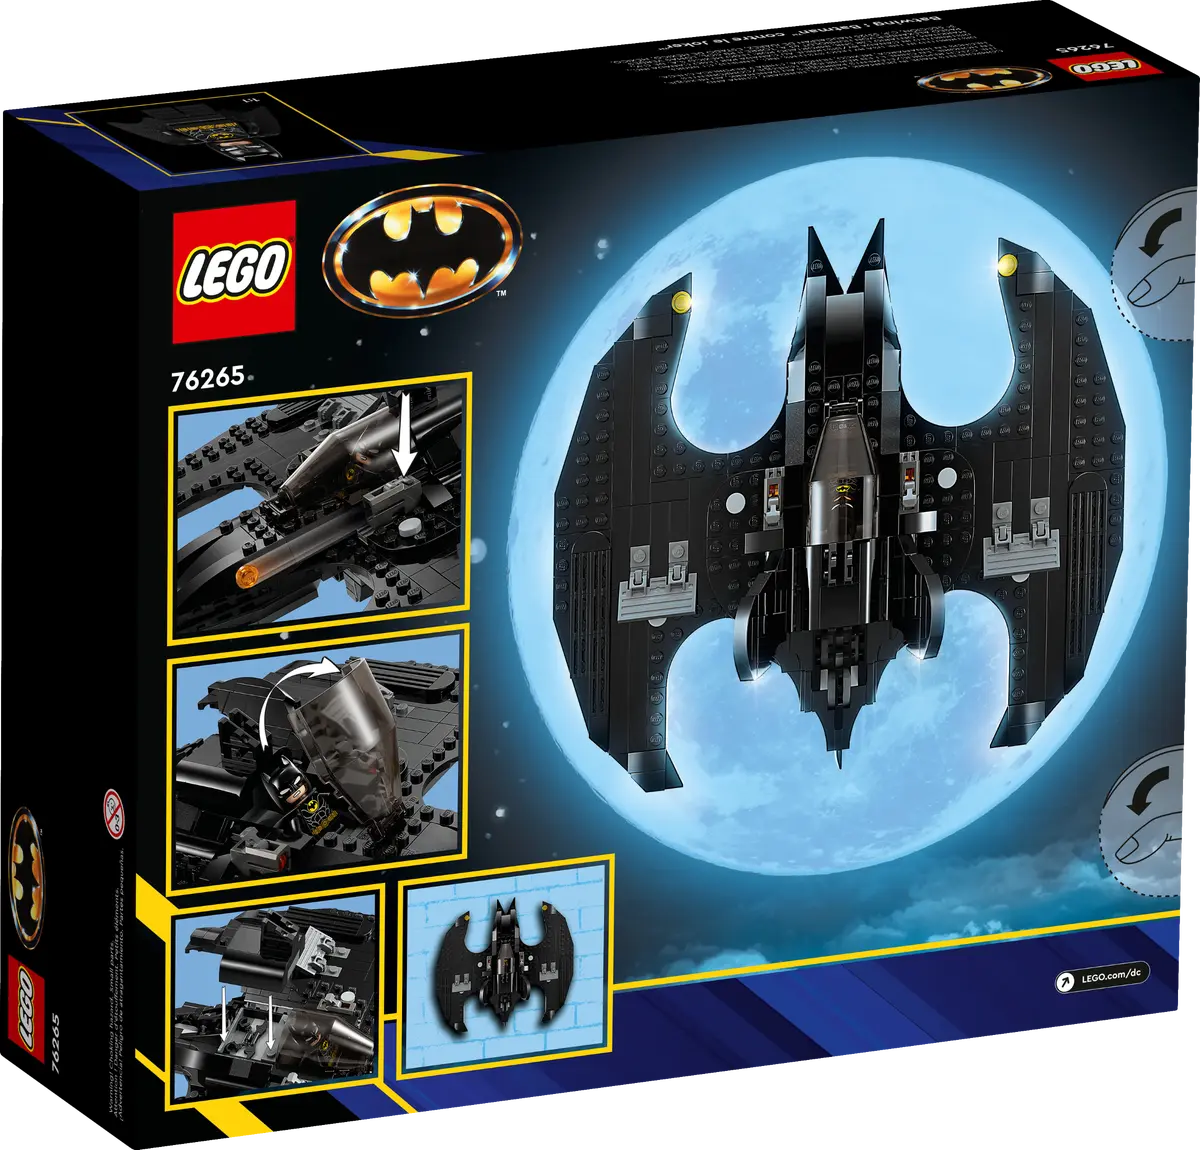 LEGO releases Batman's 1989 Batmobile replica